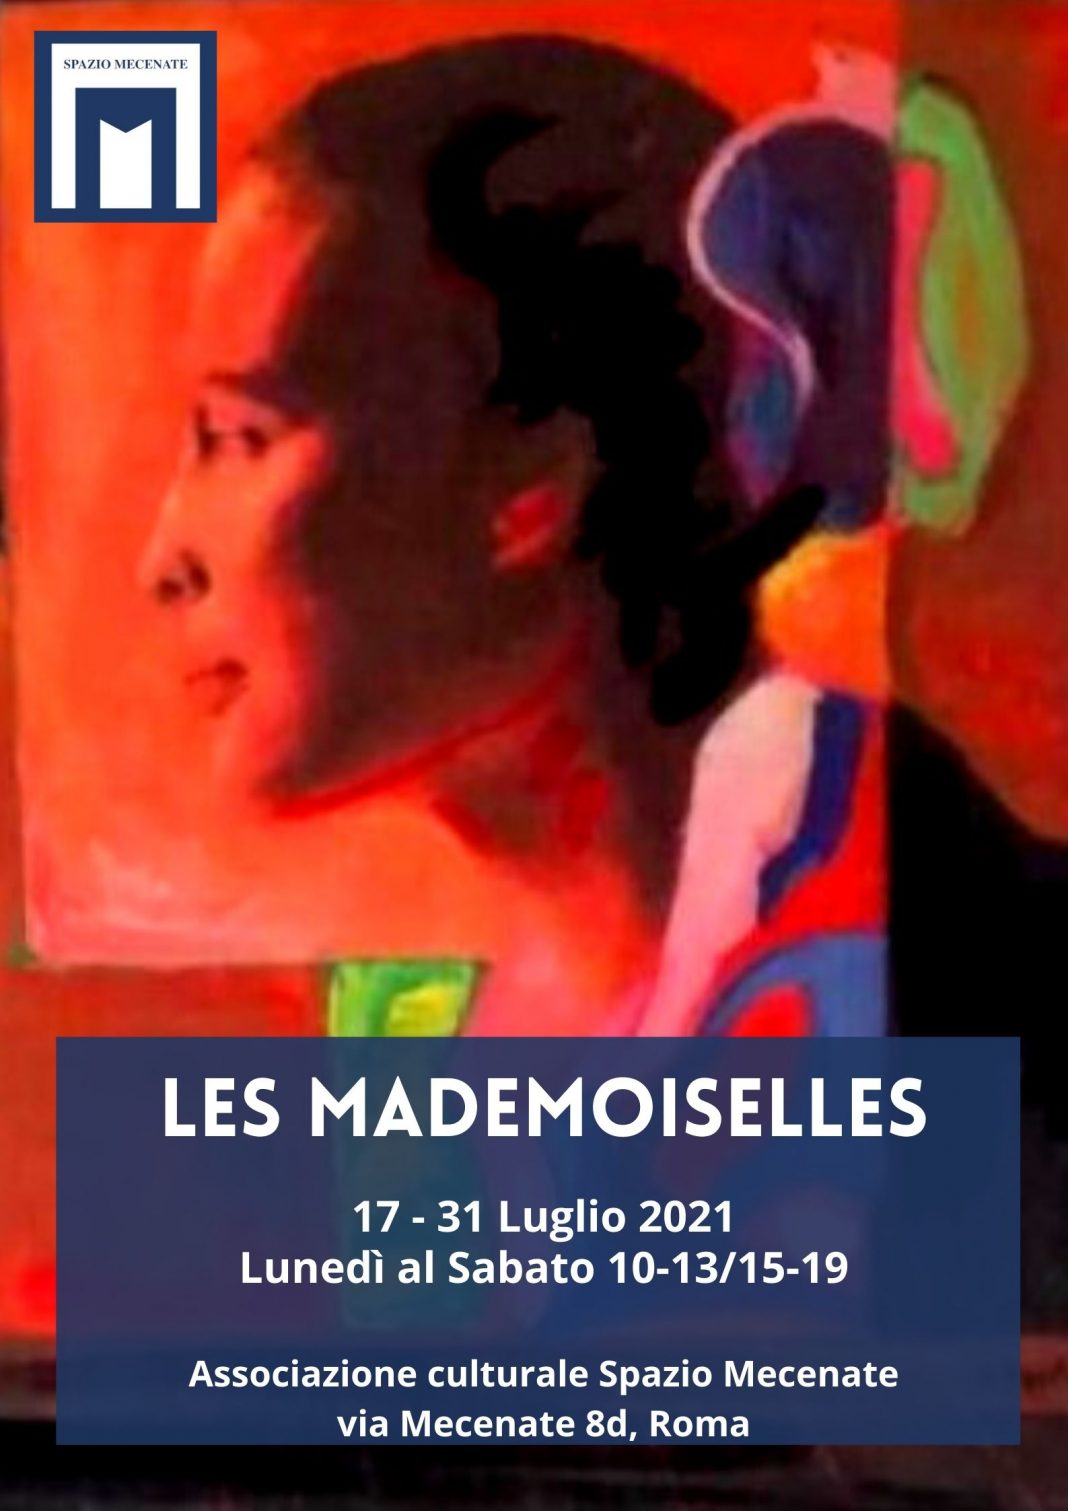 Les mademoisellehttps://www.exibart.com/repository/media/formidable/11/img/5c6/Les-mademoiselles-1068x1511.jpg